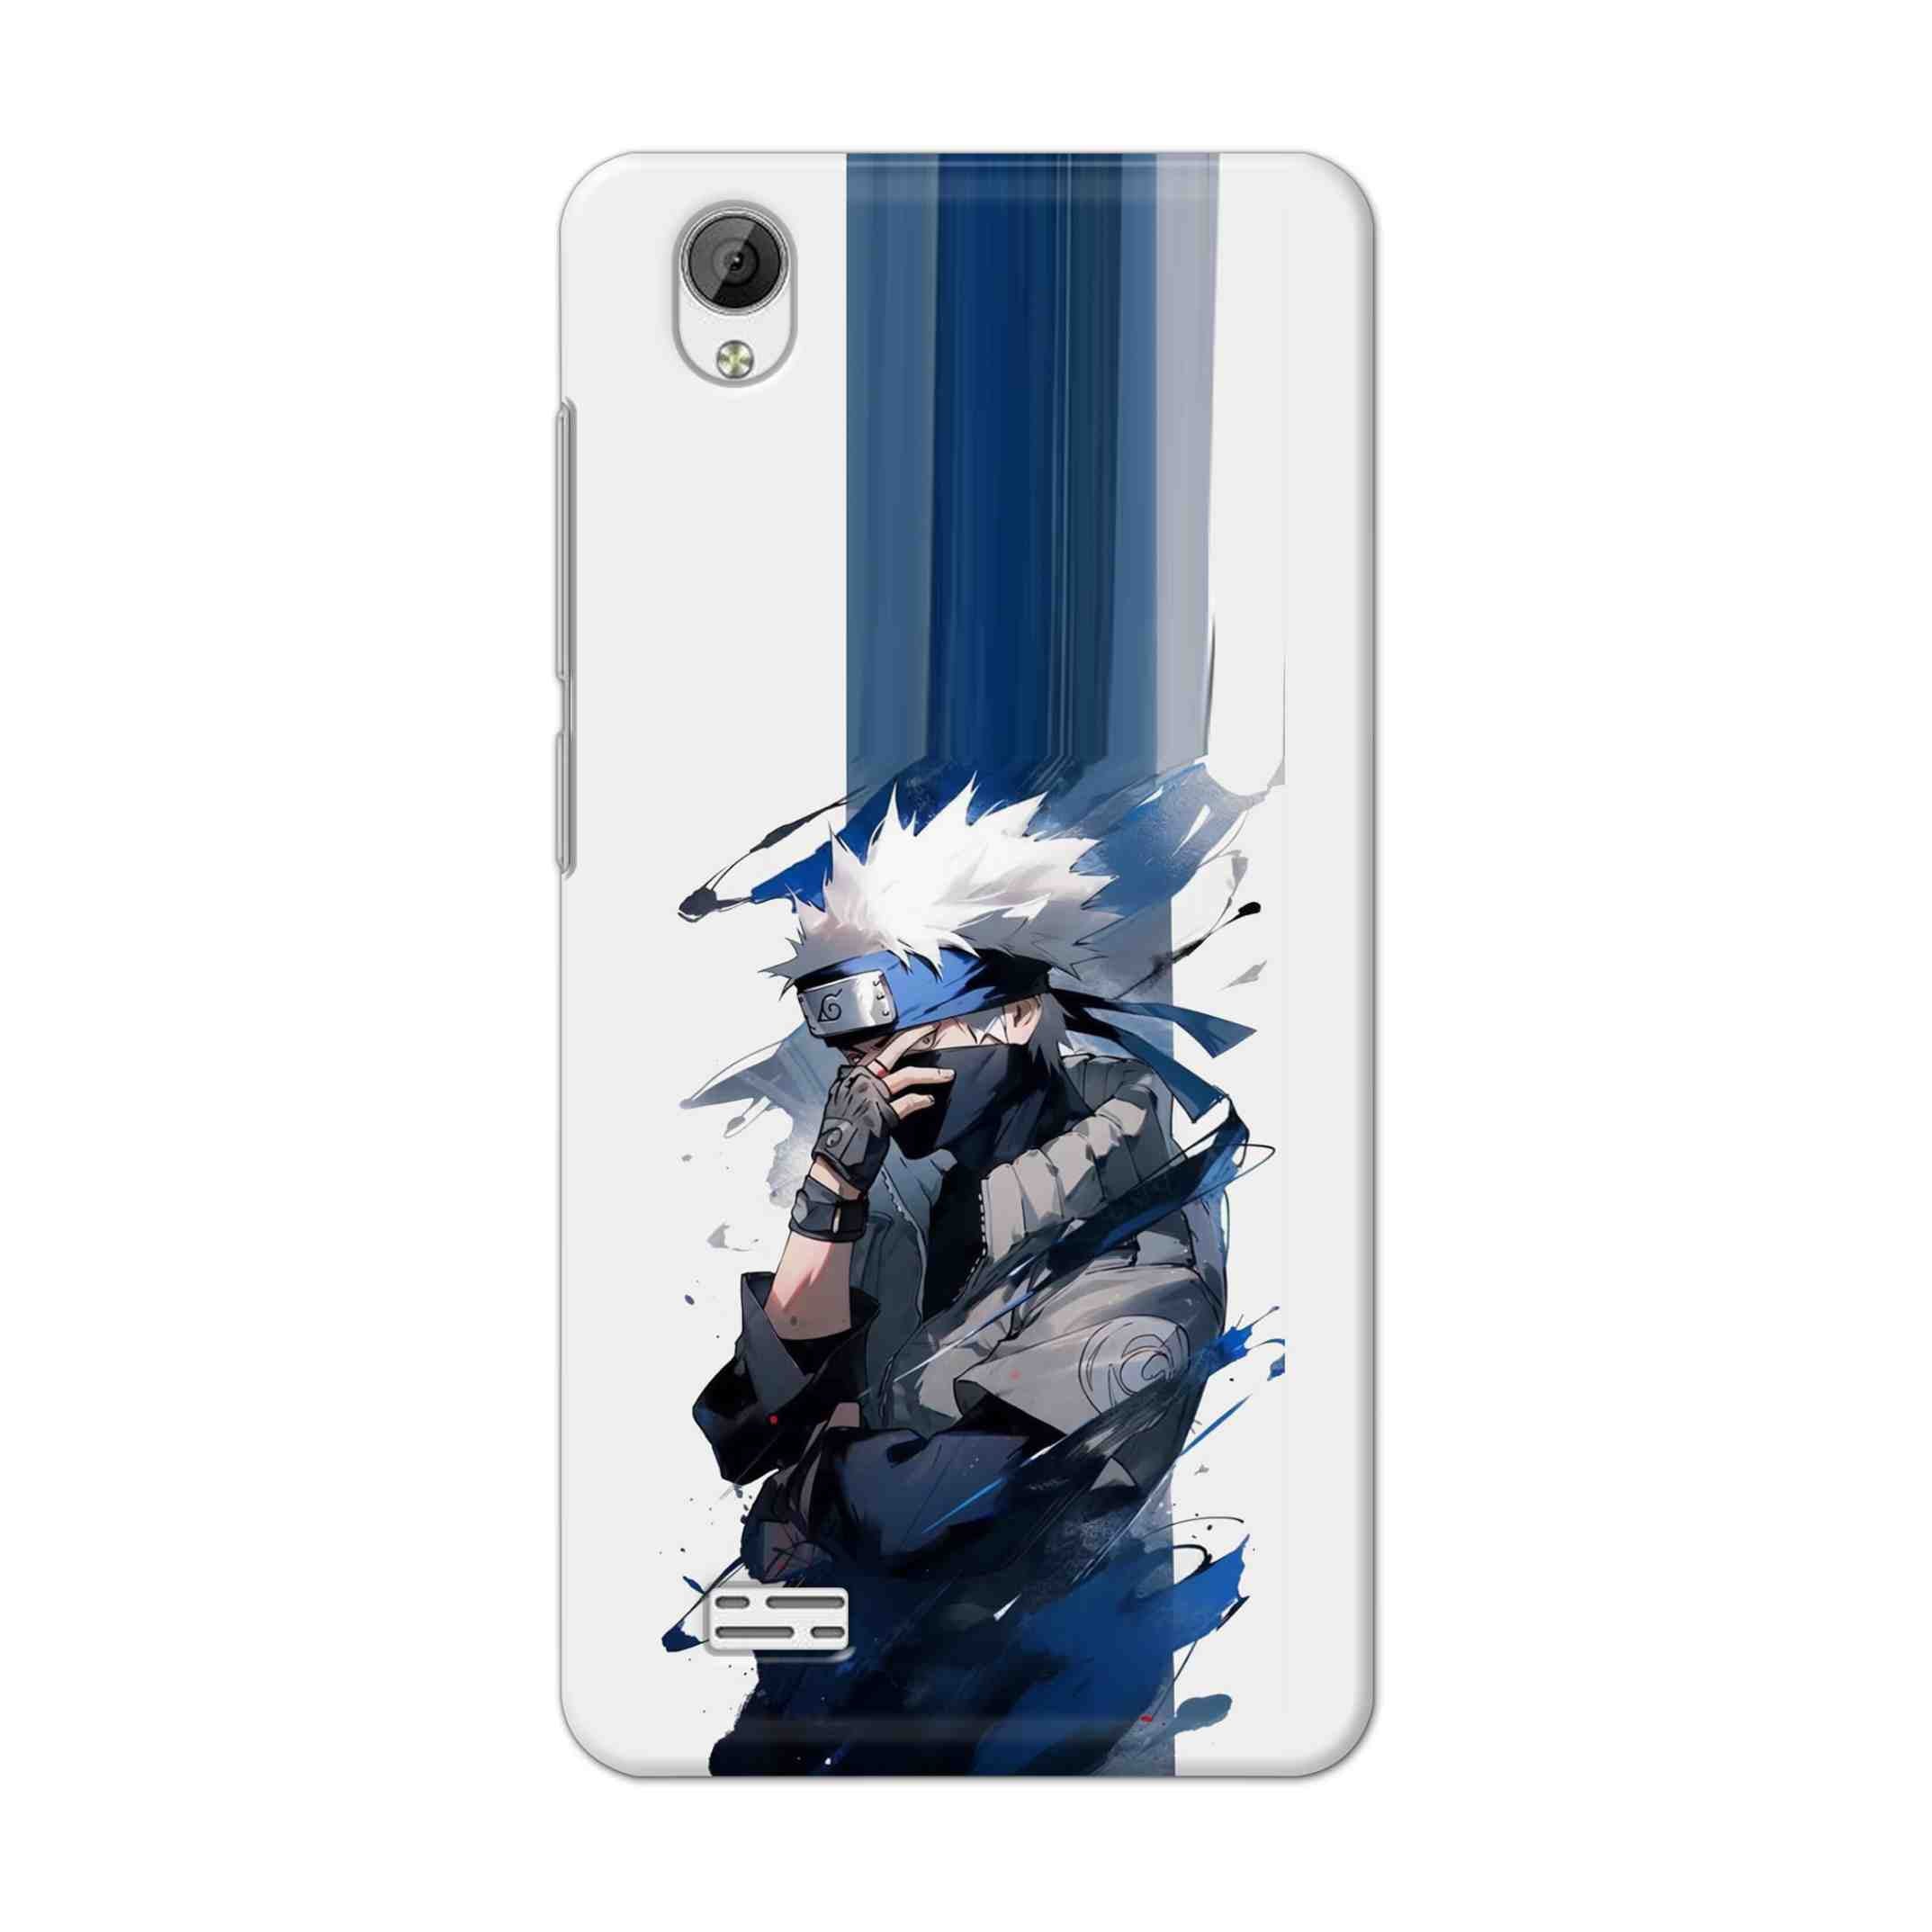 Buy Kakachi Hard Back Mobile Phone Case Cover For Vivo Y31 Online